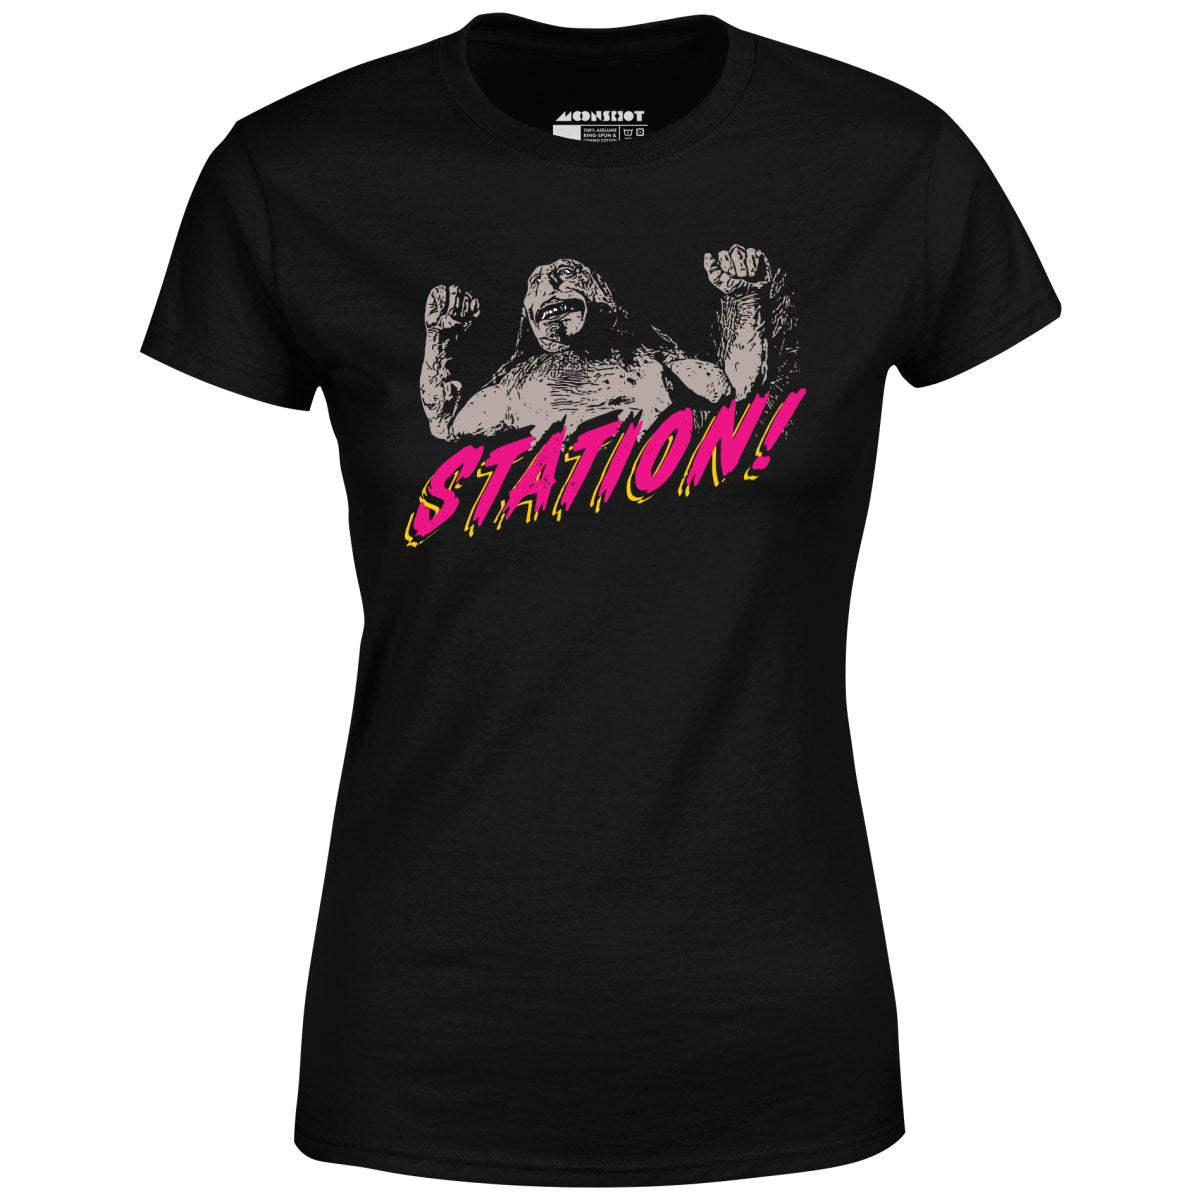 Station - Bill & Ted - Women's T-Shirt